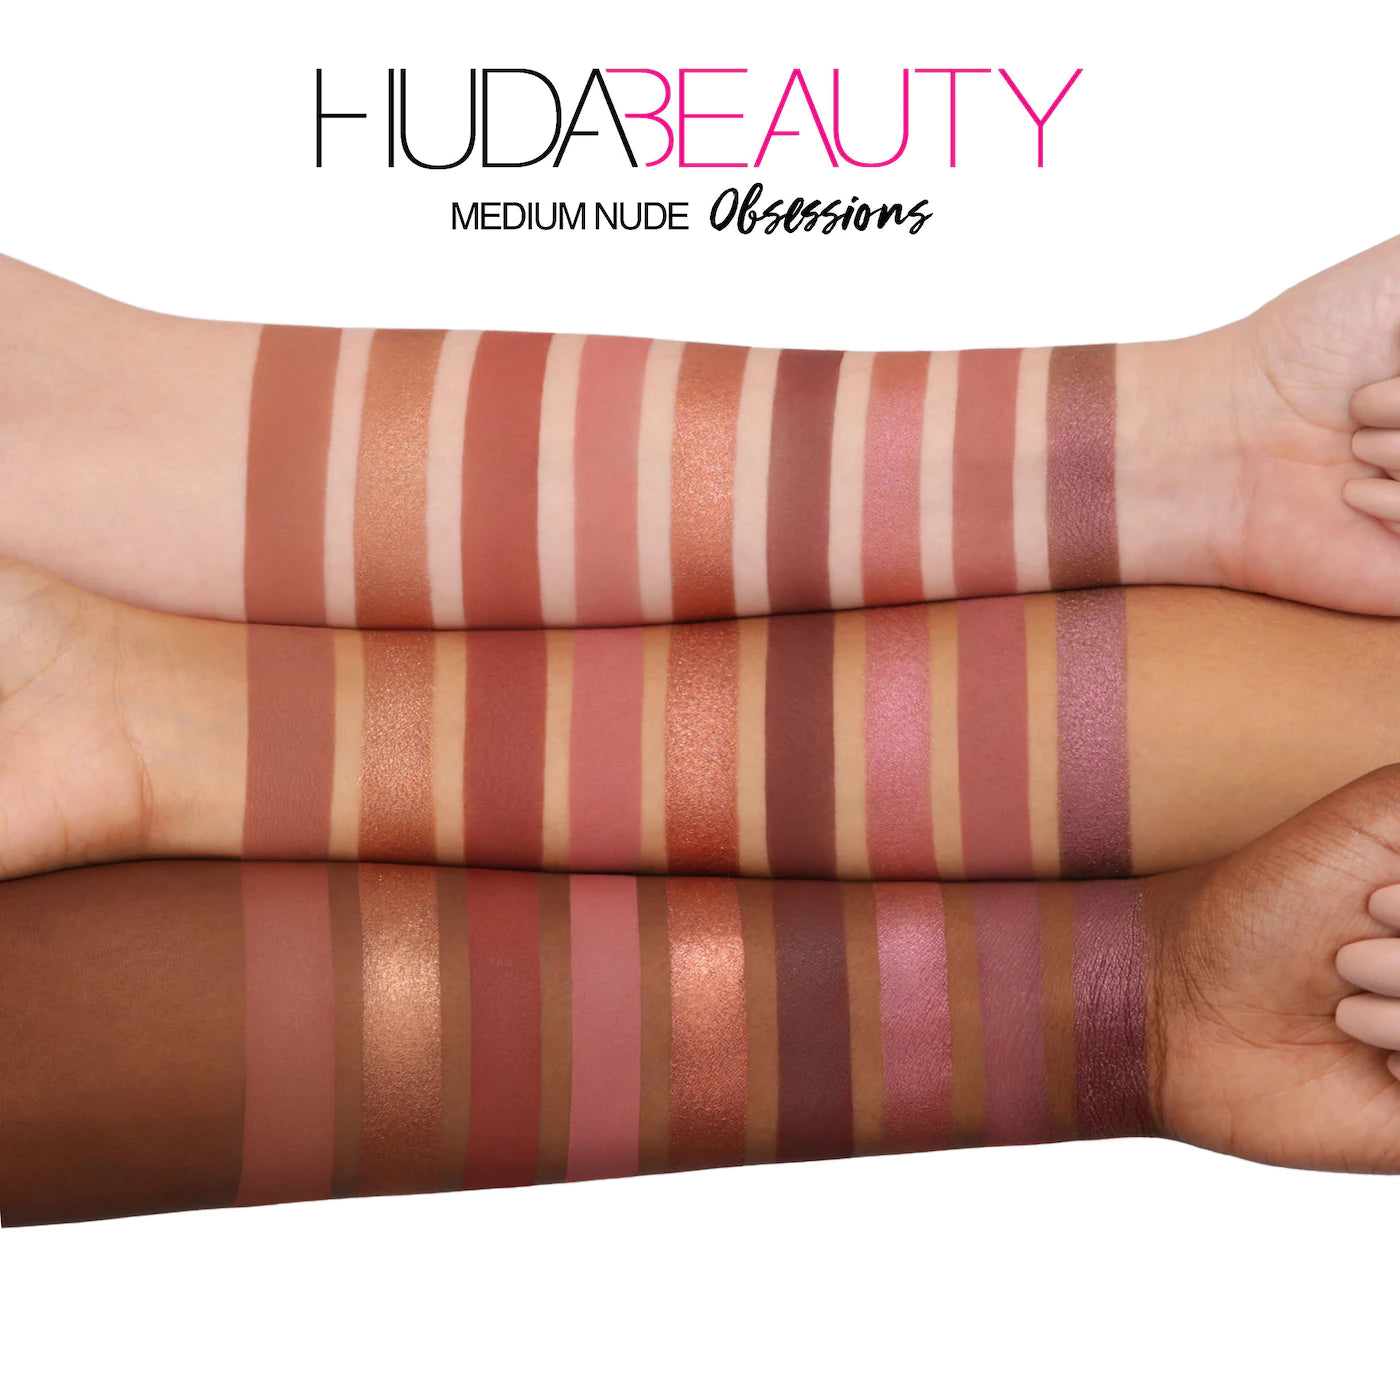 Huda Beauty - Nude Obsessions Eyeshadow Palette - Nude Medium